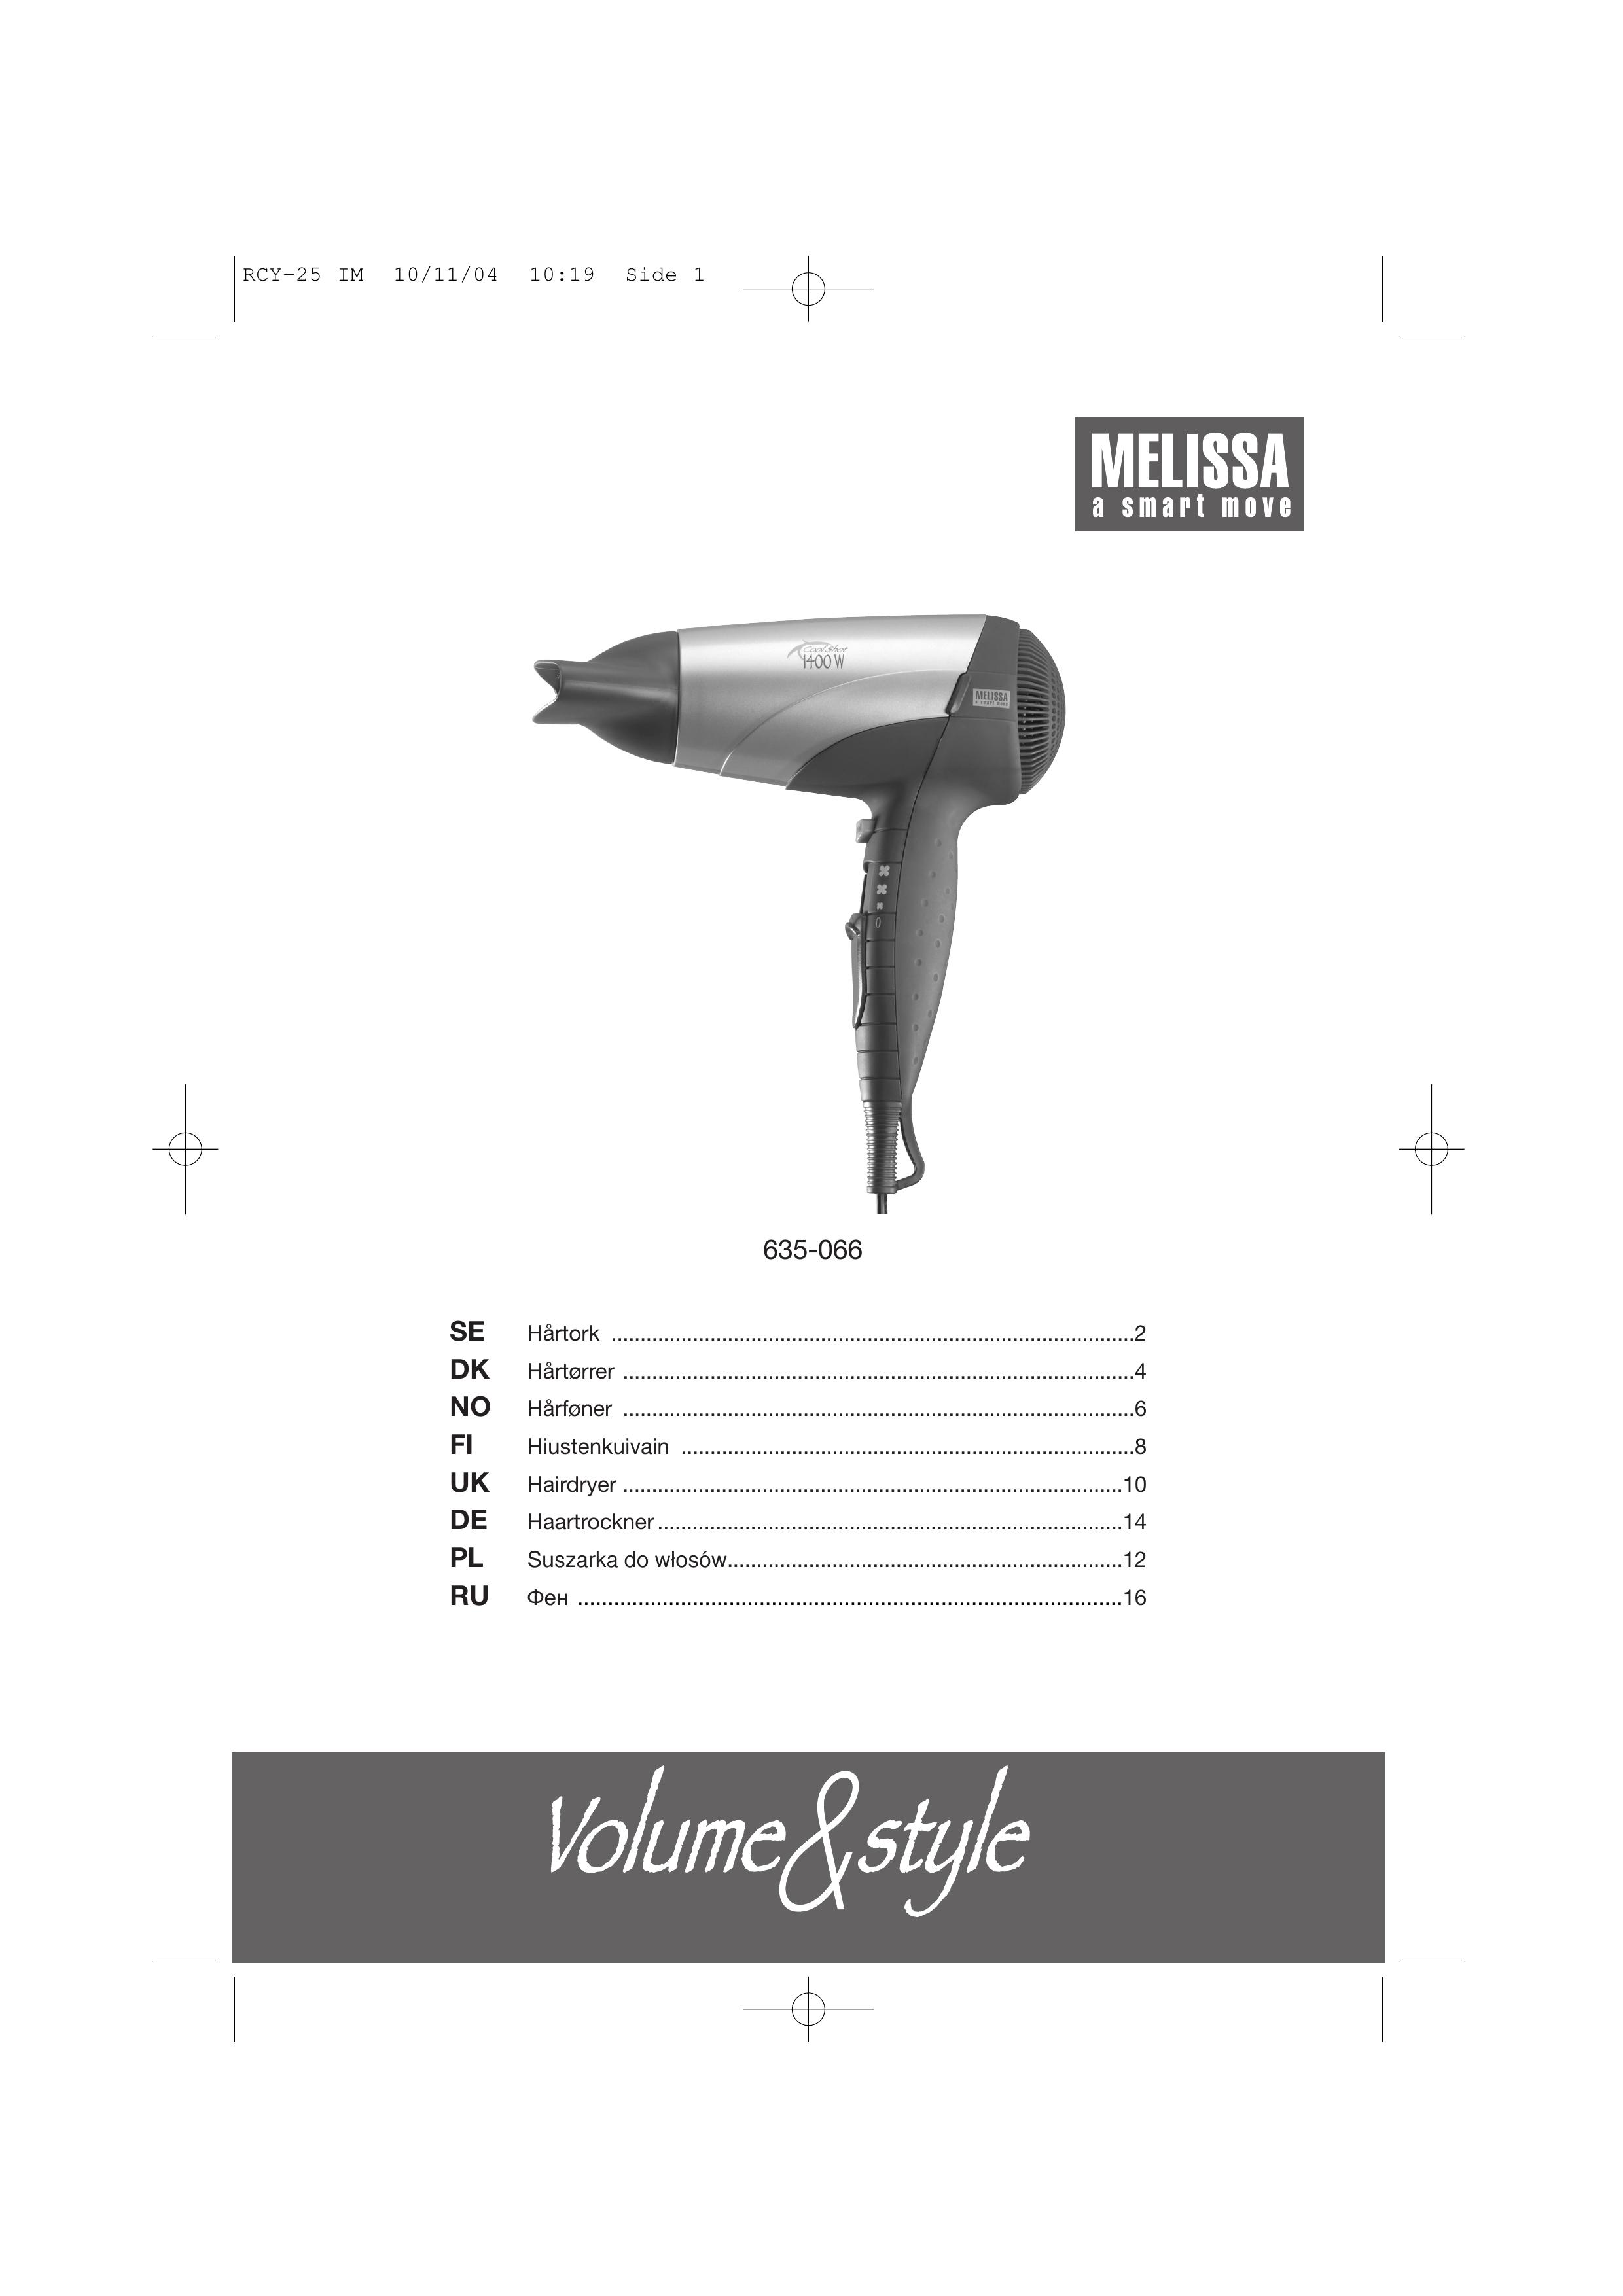 Melissa 635-066 Hair Dryer User Manual